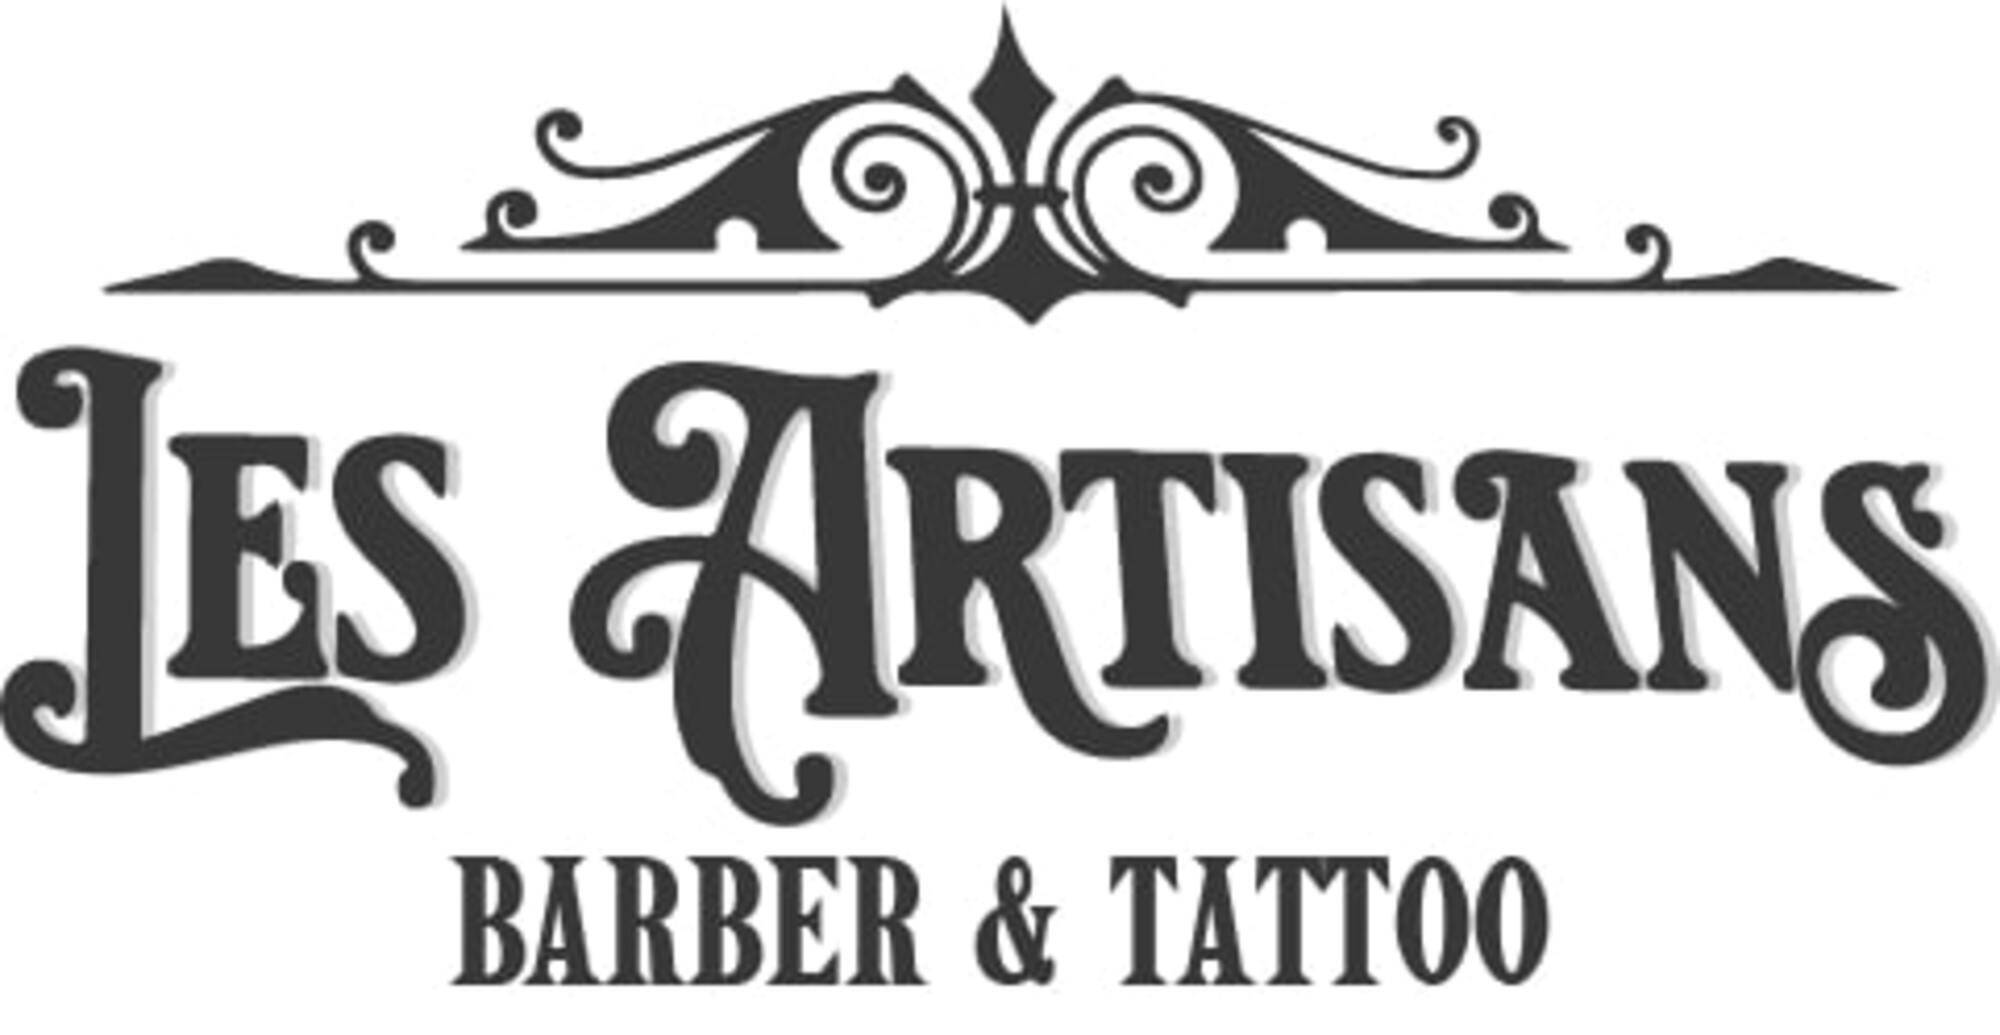 Les Artisans Barber & Tattoo